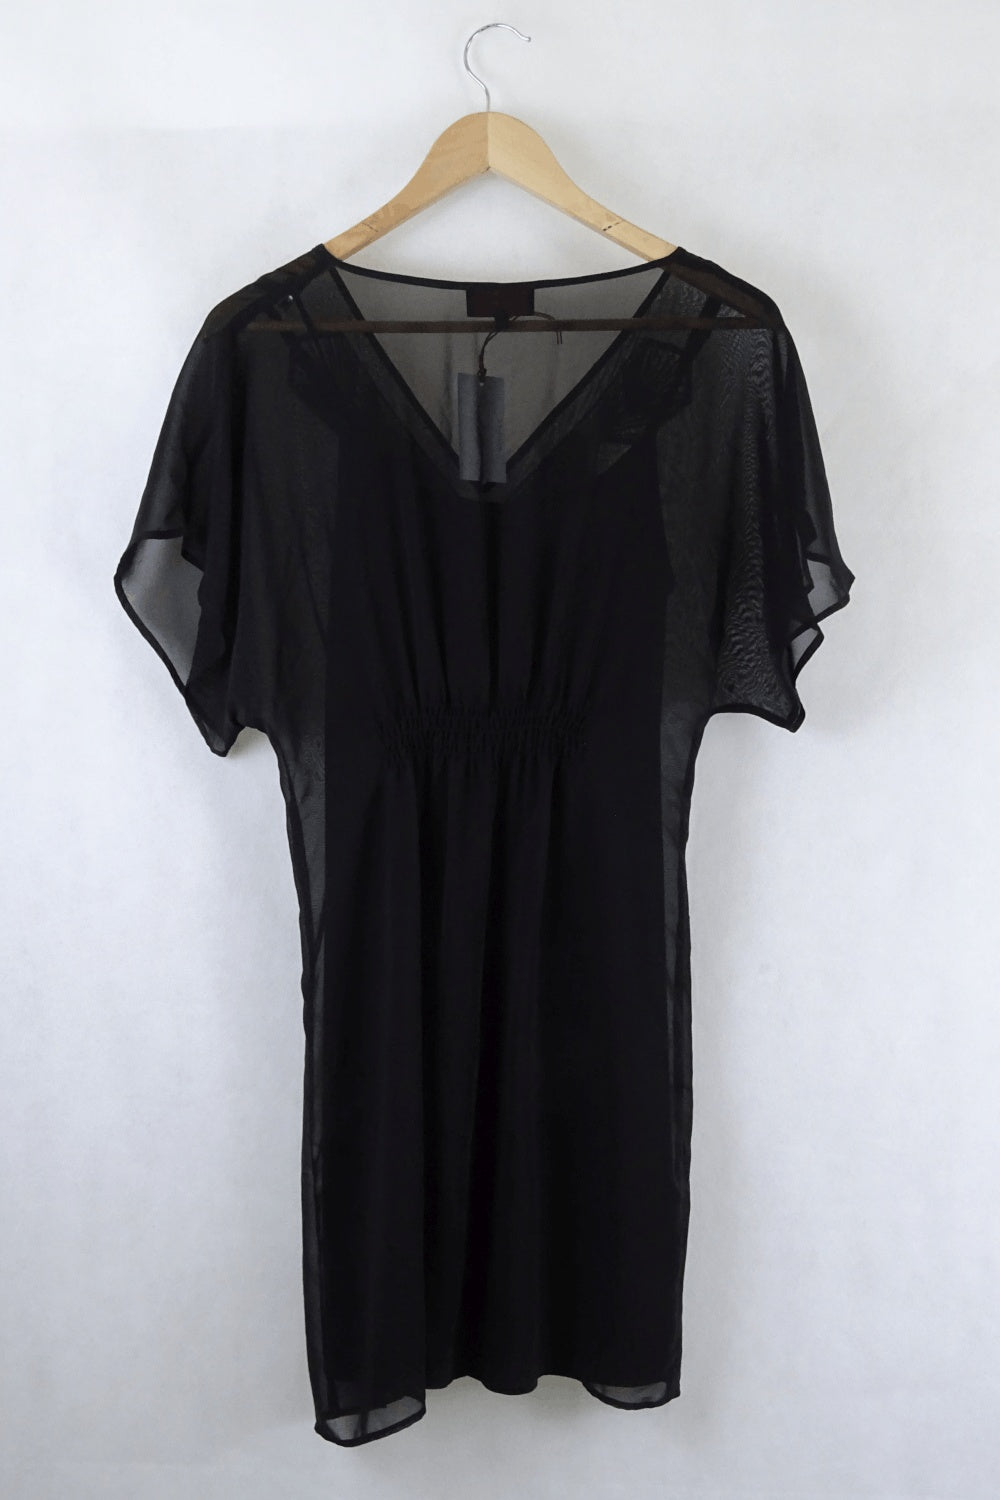 Wayne Cooper Black Sequined Dress With Slip 6